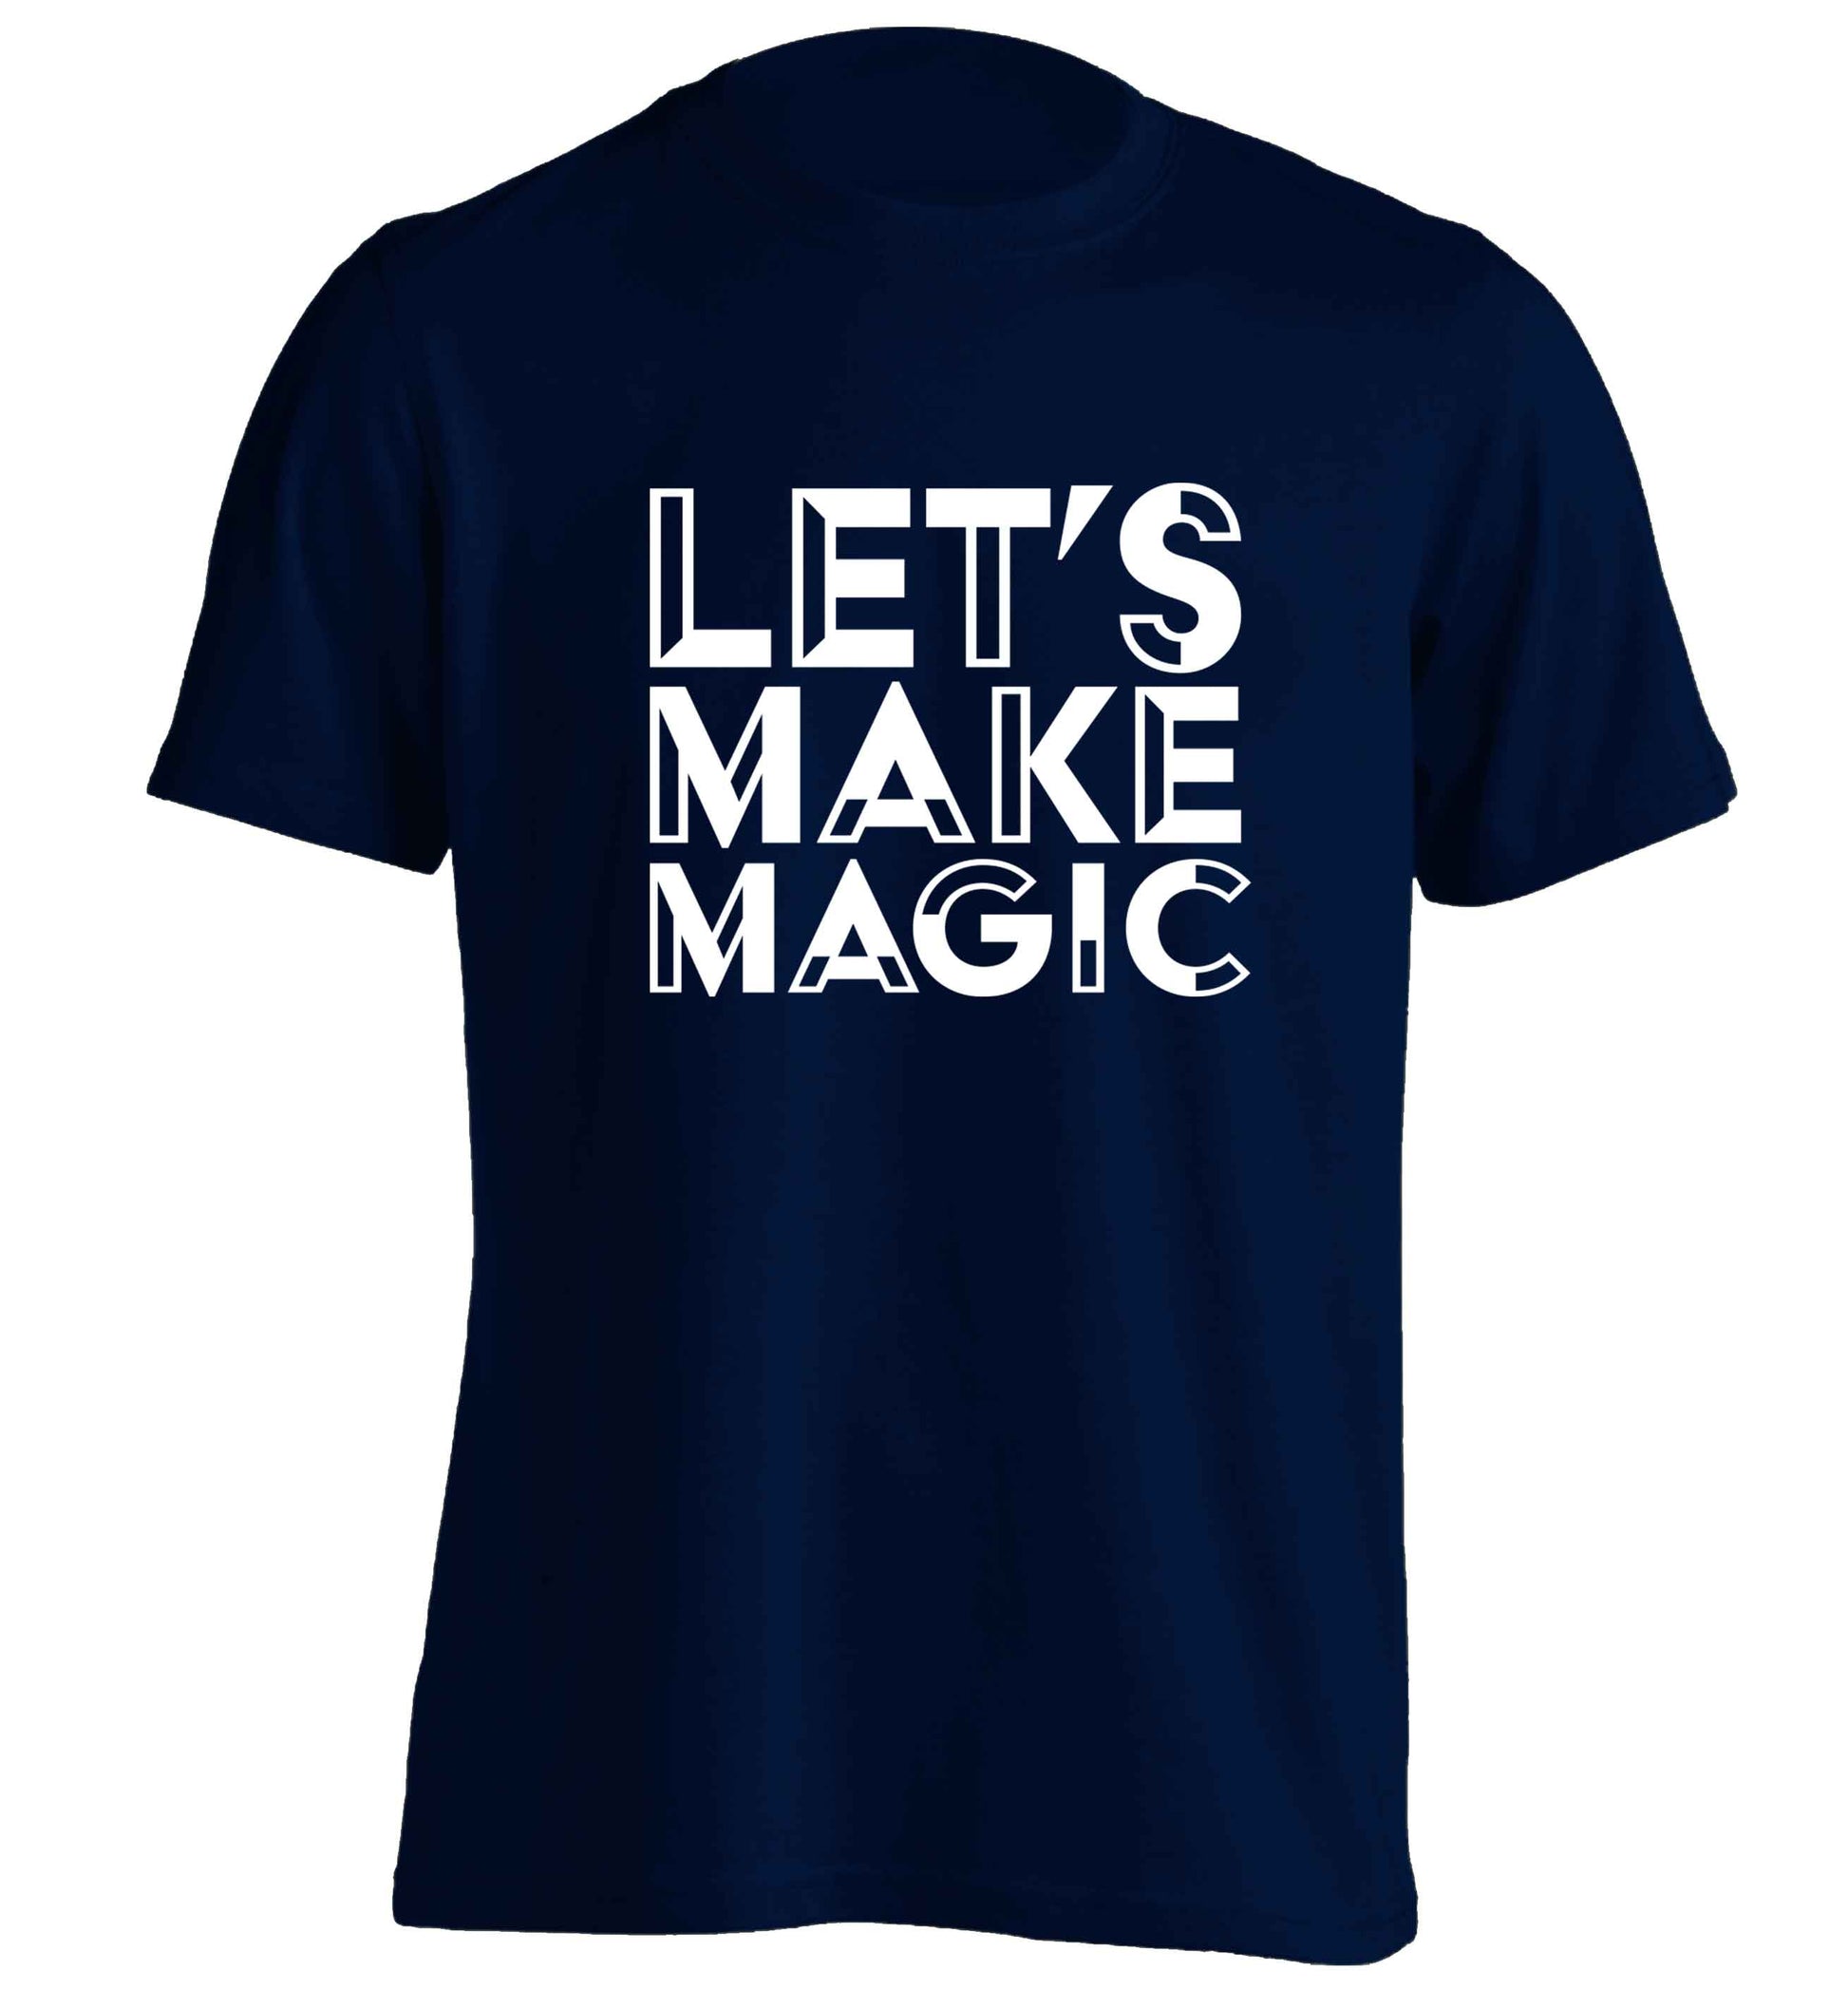 Let's make magic adults unisex navy Tshirt 2XL